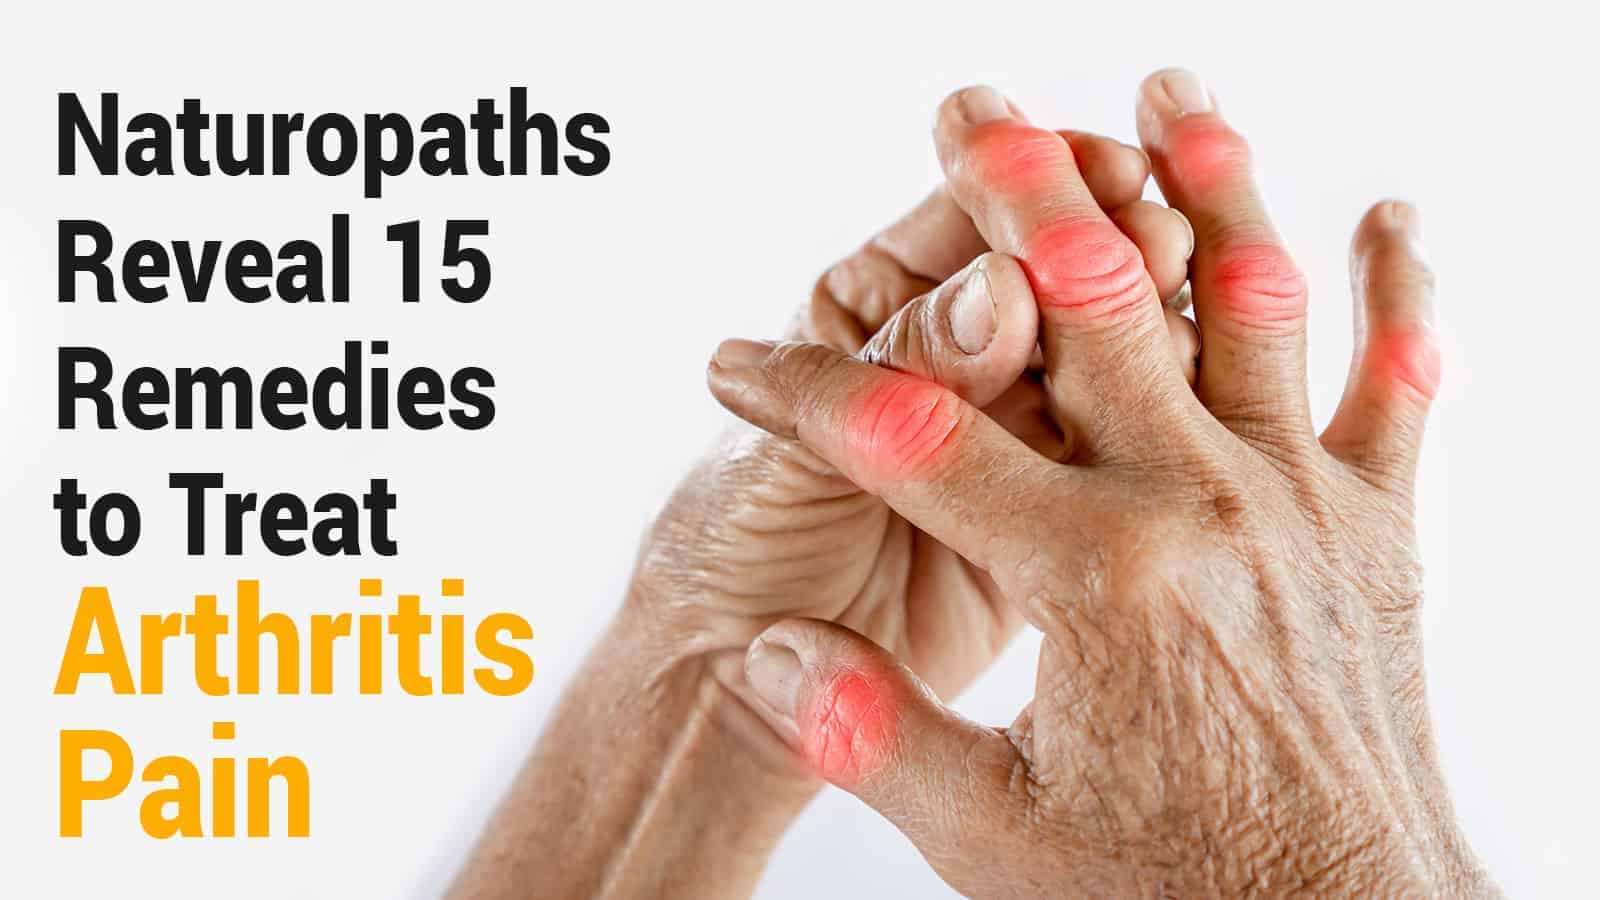 Naturopaths Reveal 15 Remedies to Treat Arthritis Pain